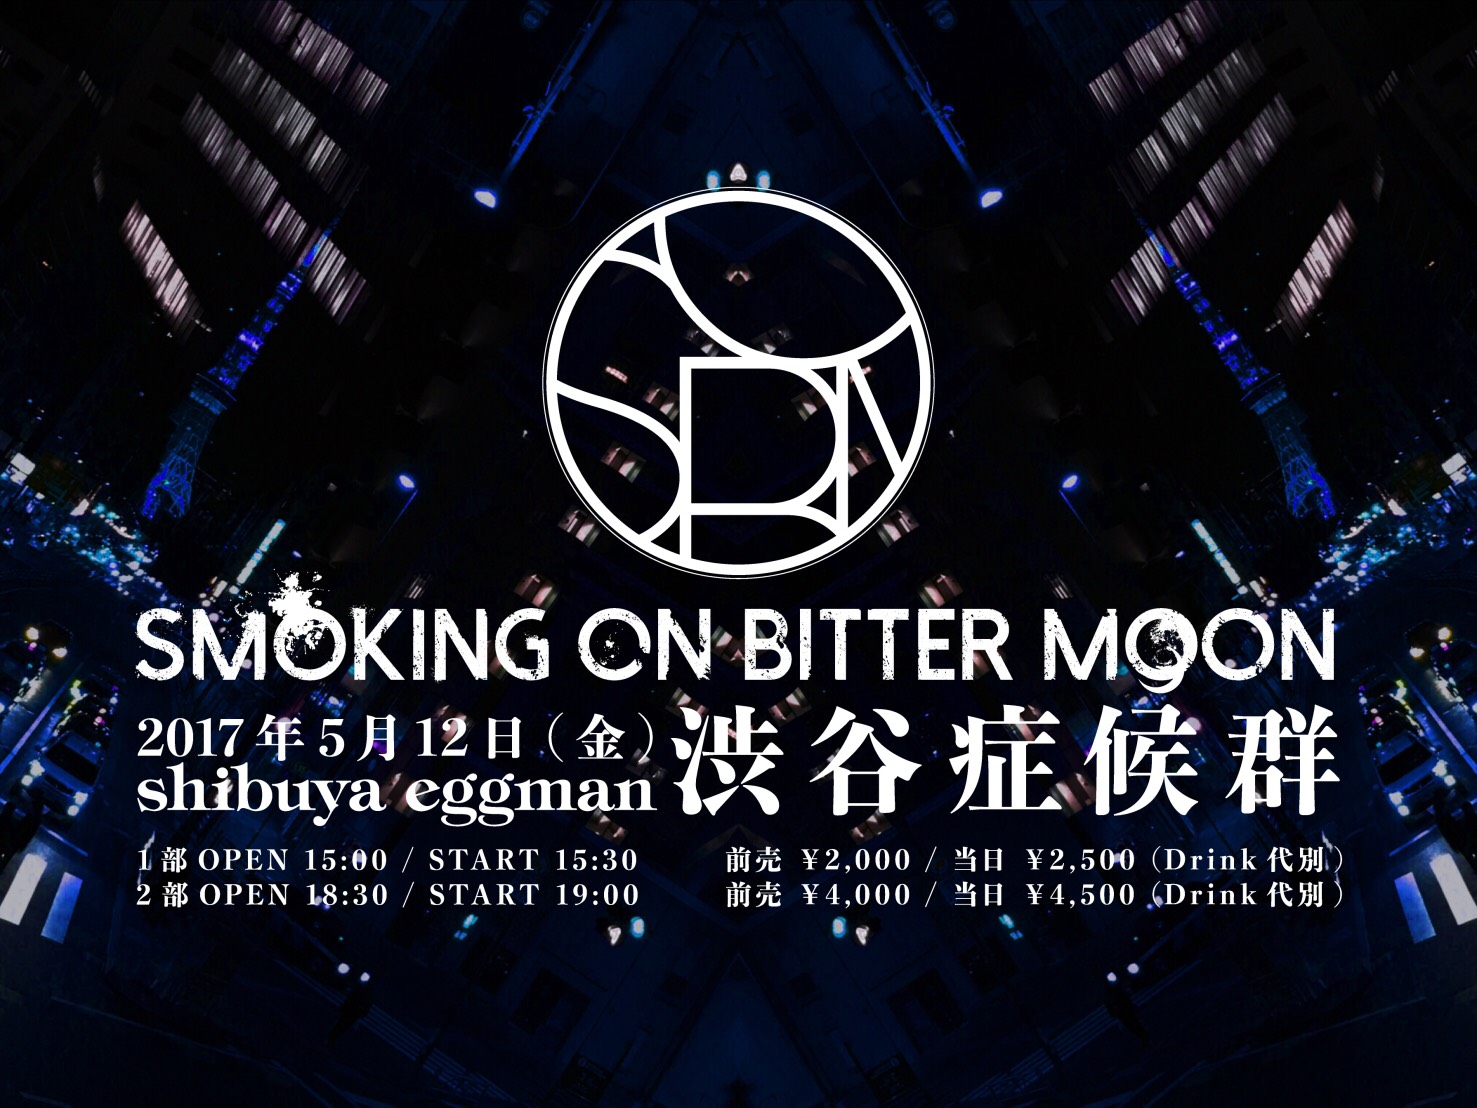 SMOKING ON BITTER MOON「渋谷症候群」